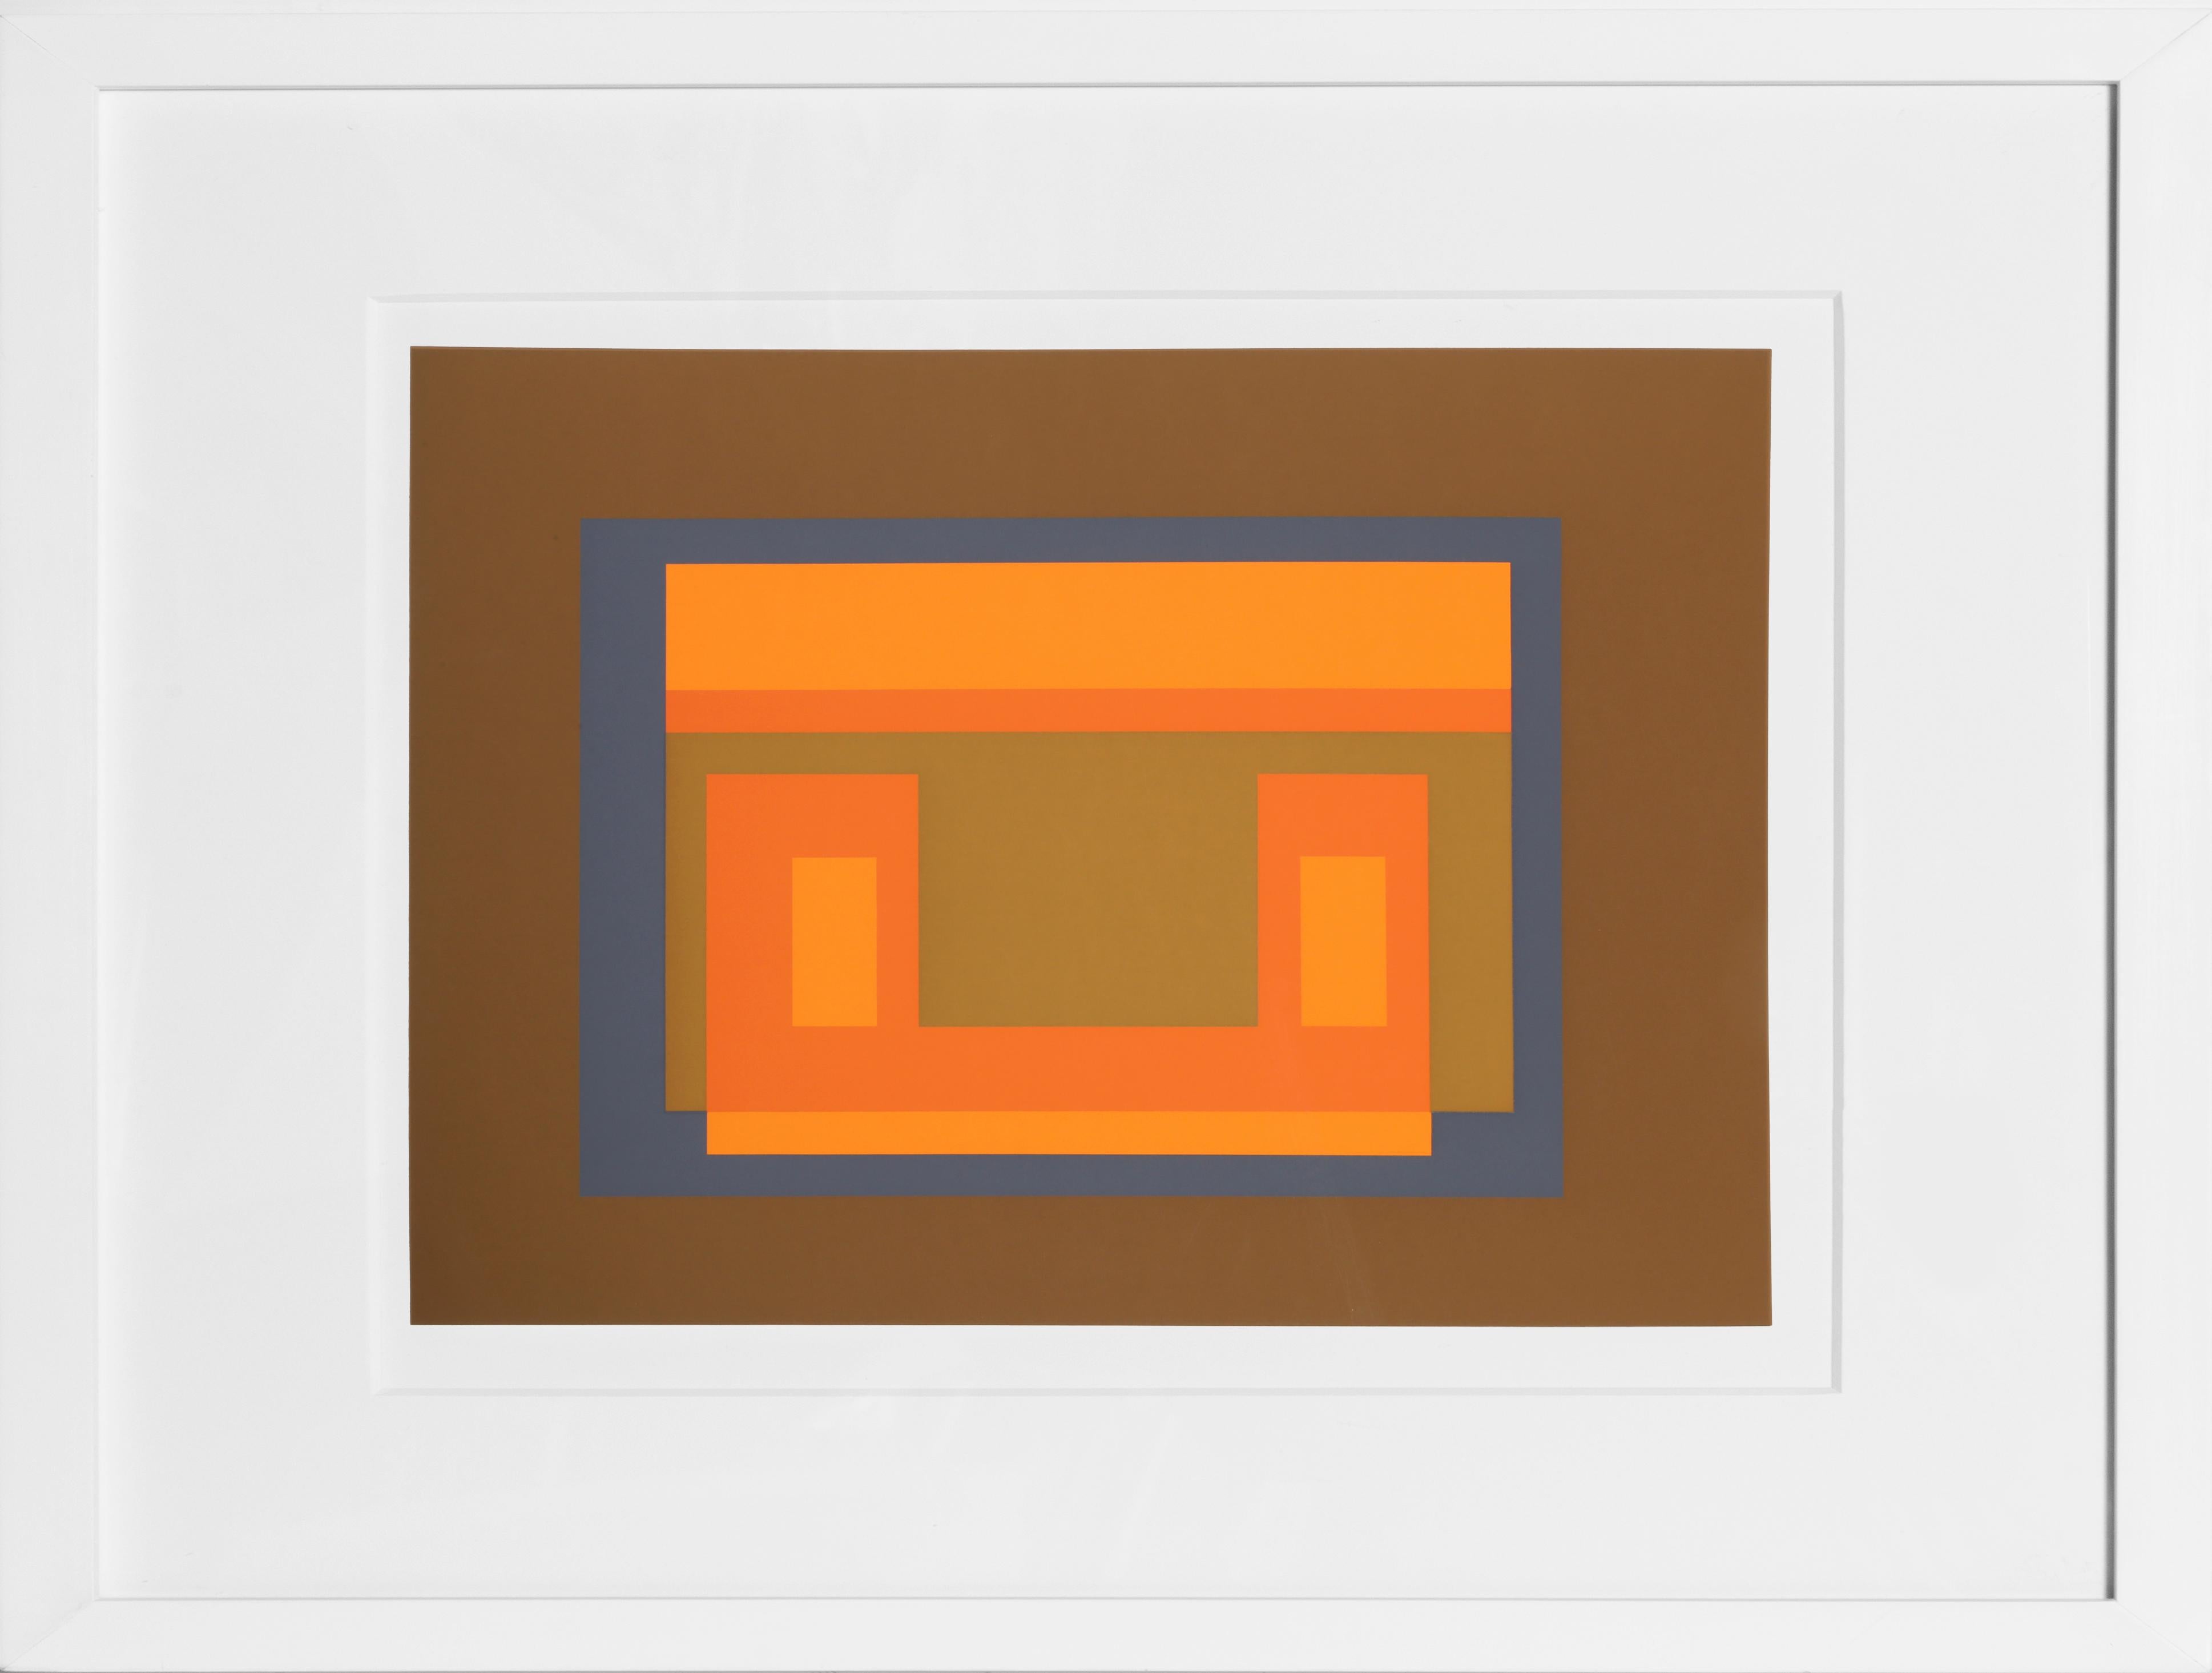 Artist:	Josef Albers
Portfolio: Formulation: Articulation (Double Portfolio)
Title:	Portfolio 1, Folder 11, Image 1
Year:	1972
Medium:	Silkscreen
Edition:	1000
Paper Size:	15 x 20 inches [38.1 x 50.8 cm]
Frame: 20 x 24 inches

Formulation: